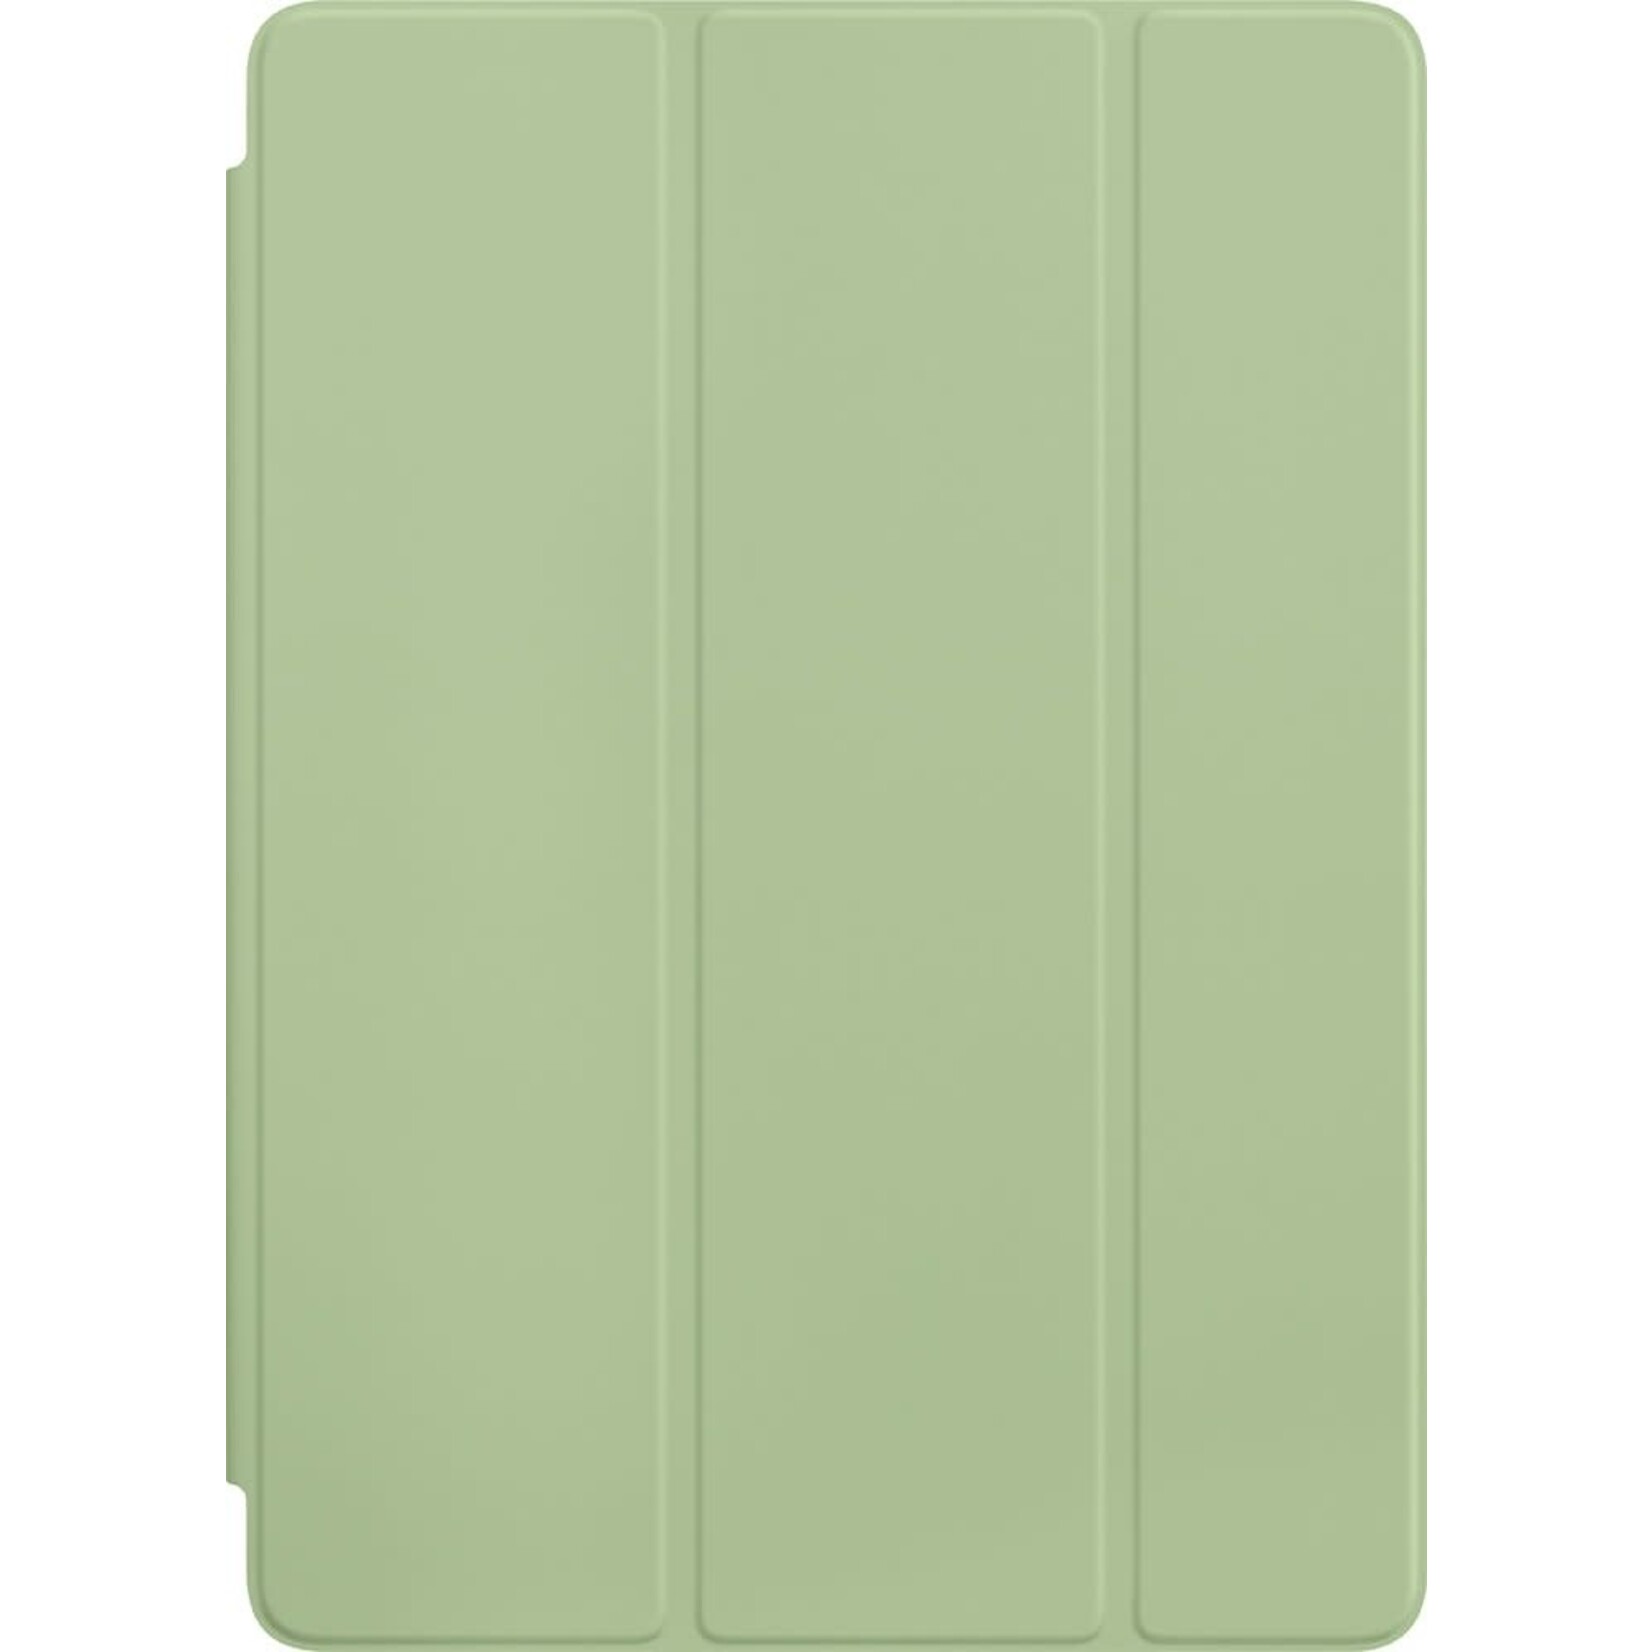 iPad Pro (9.7") Smart Cover-Mint